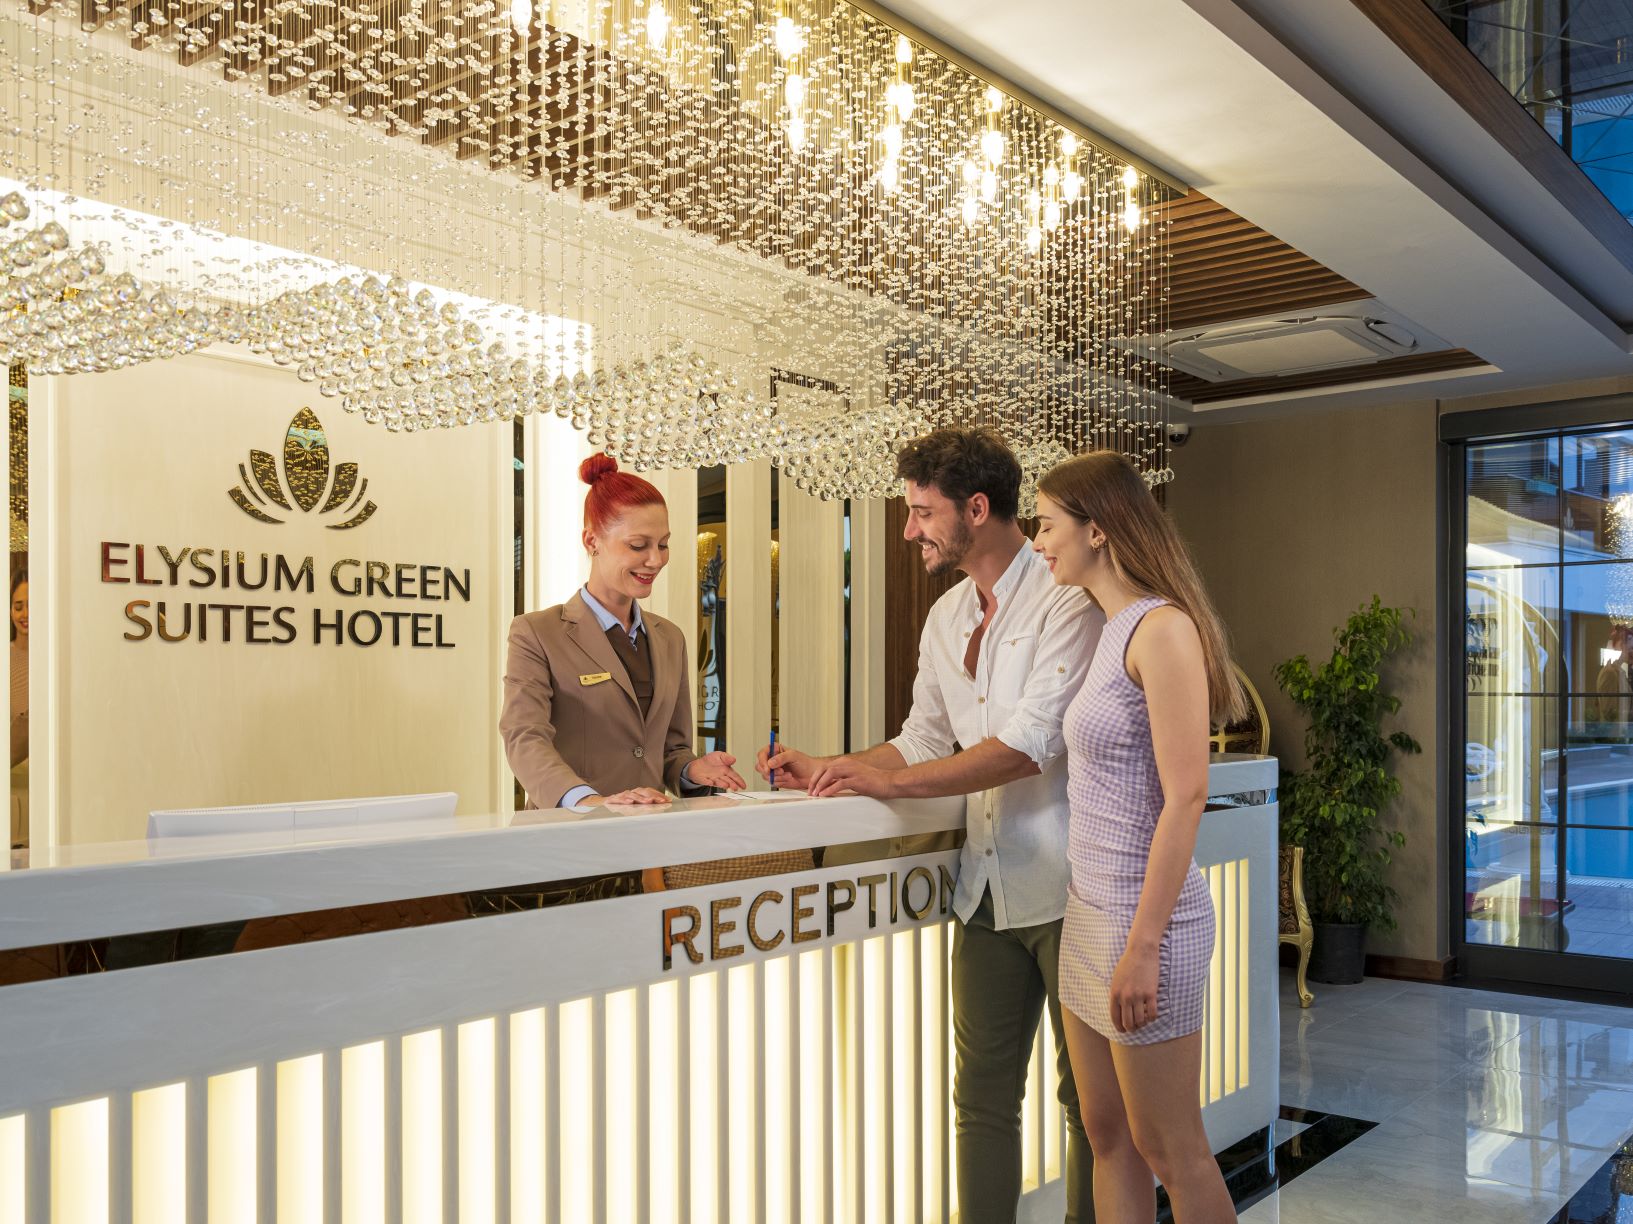 Elysium Green Suites